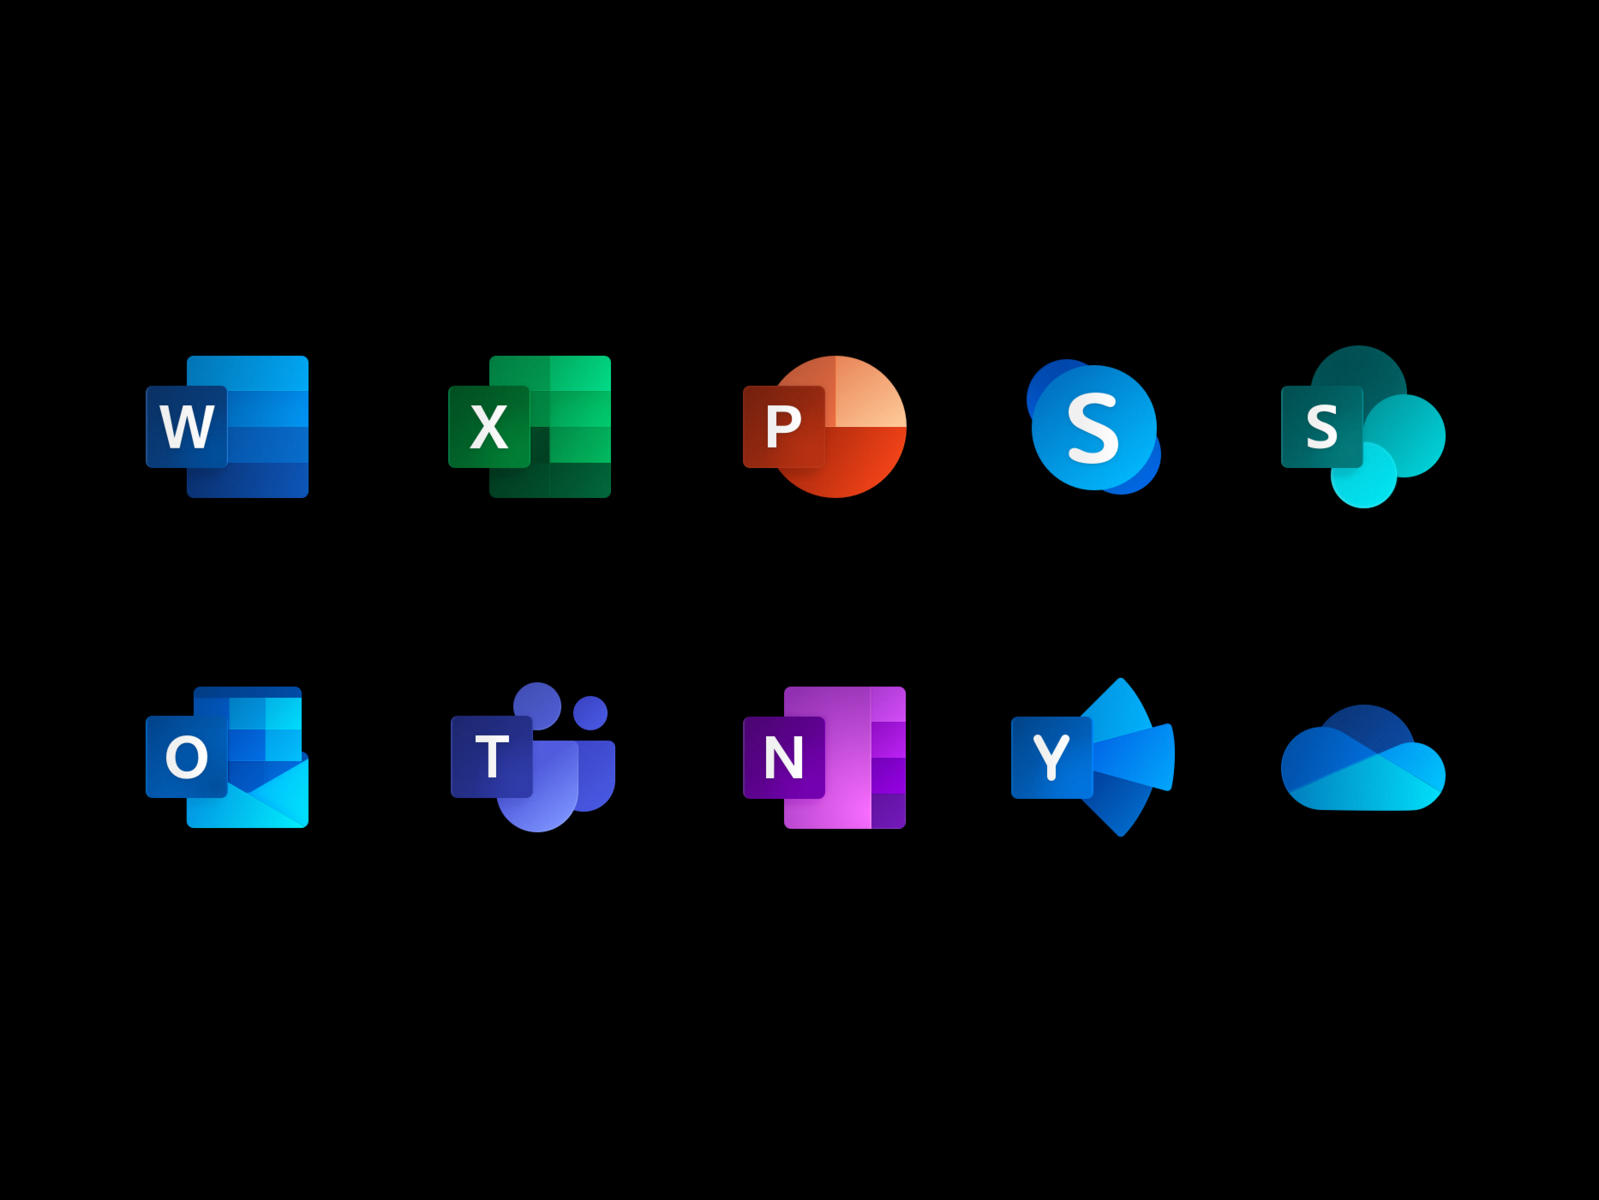 Microsoft Office Fluent Icons by Corey Ginnivan on Dribbble